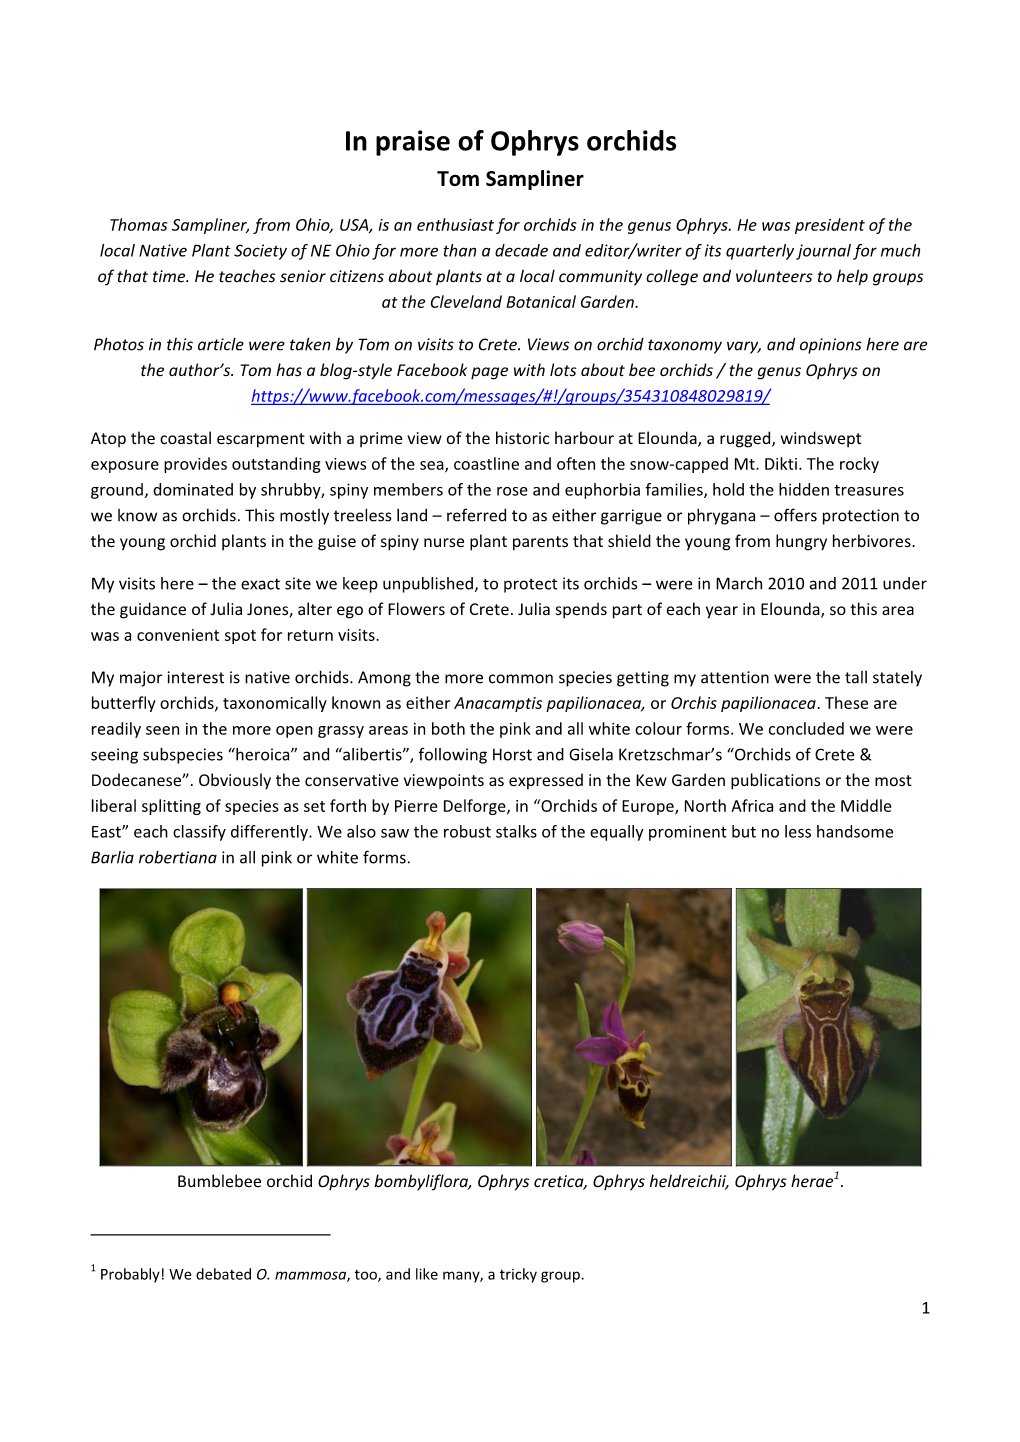 In Praise of Ophrys Orchids Tom Sampliner